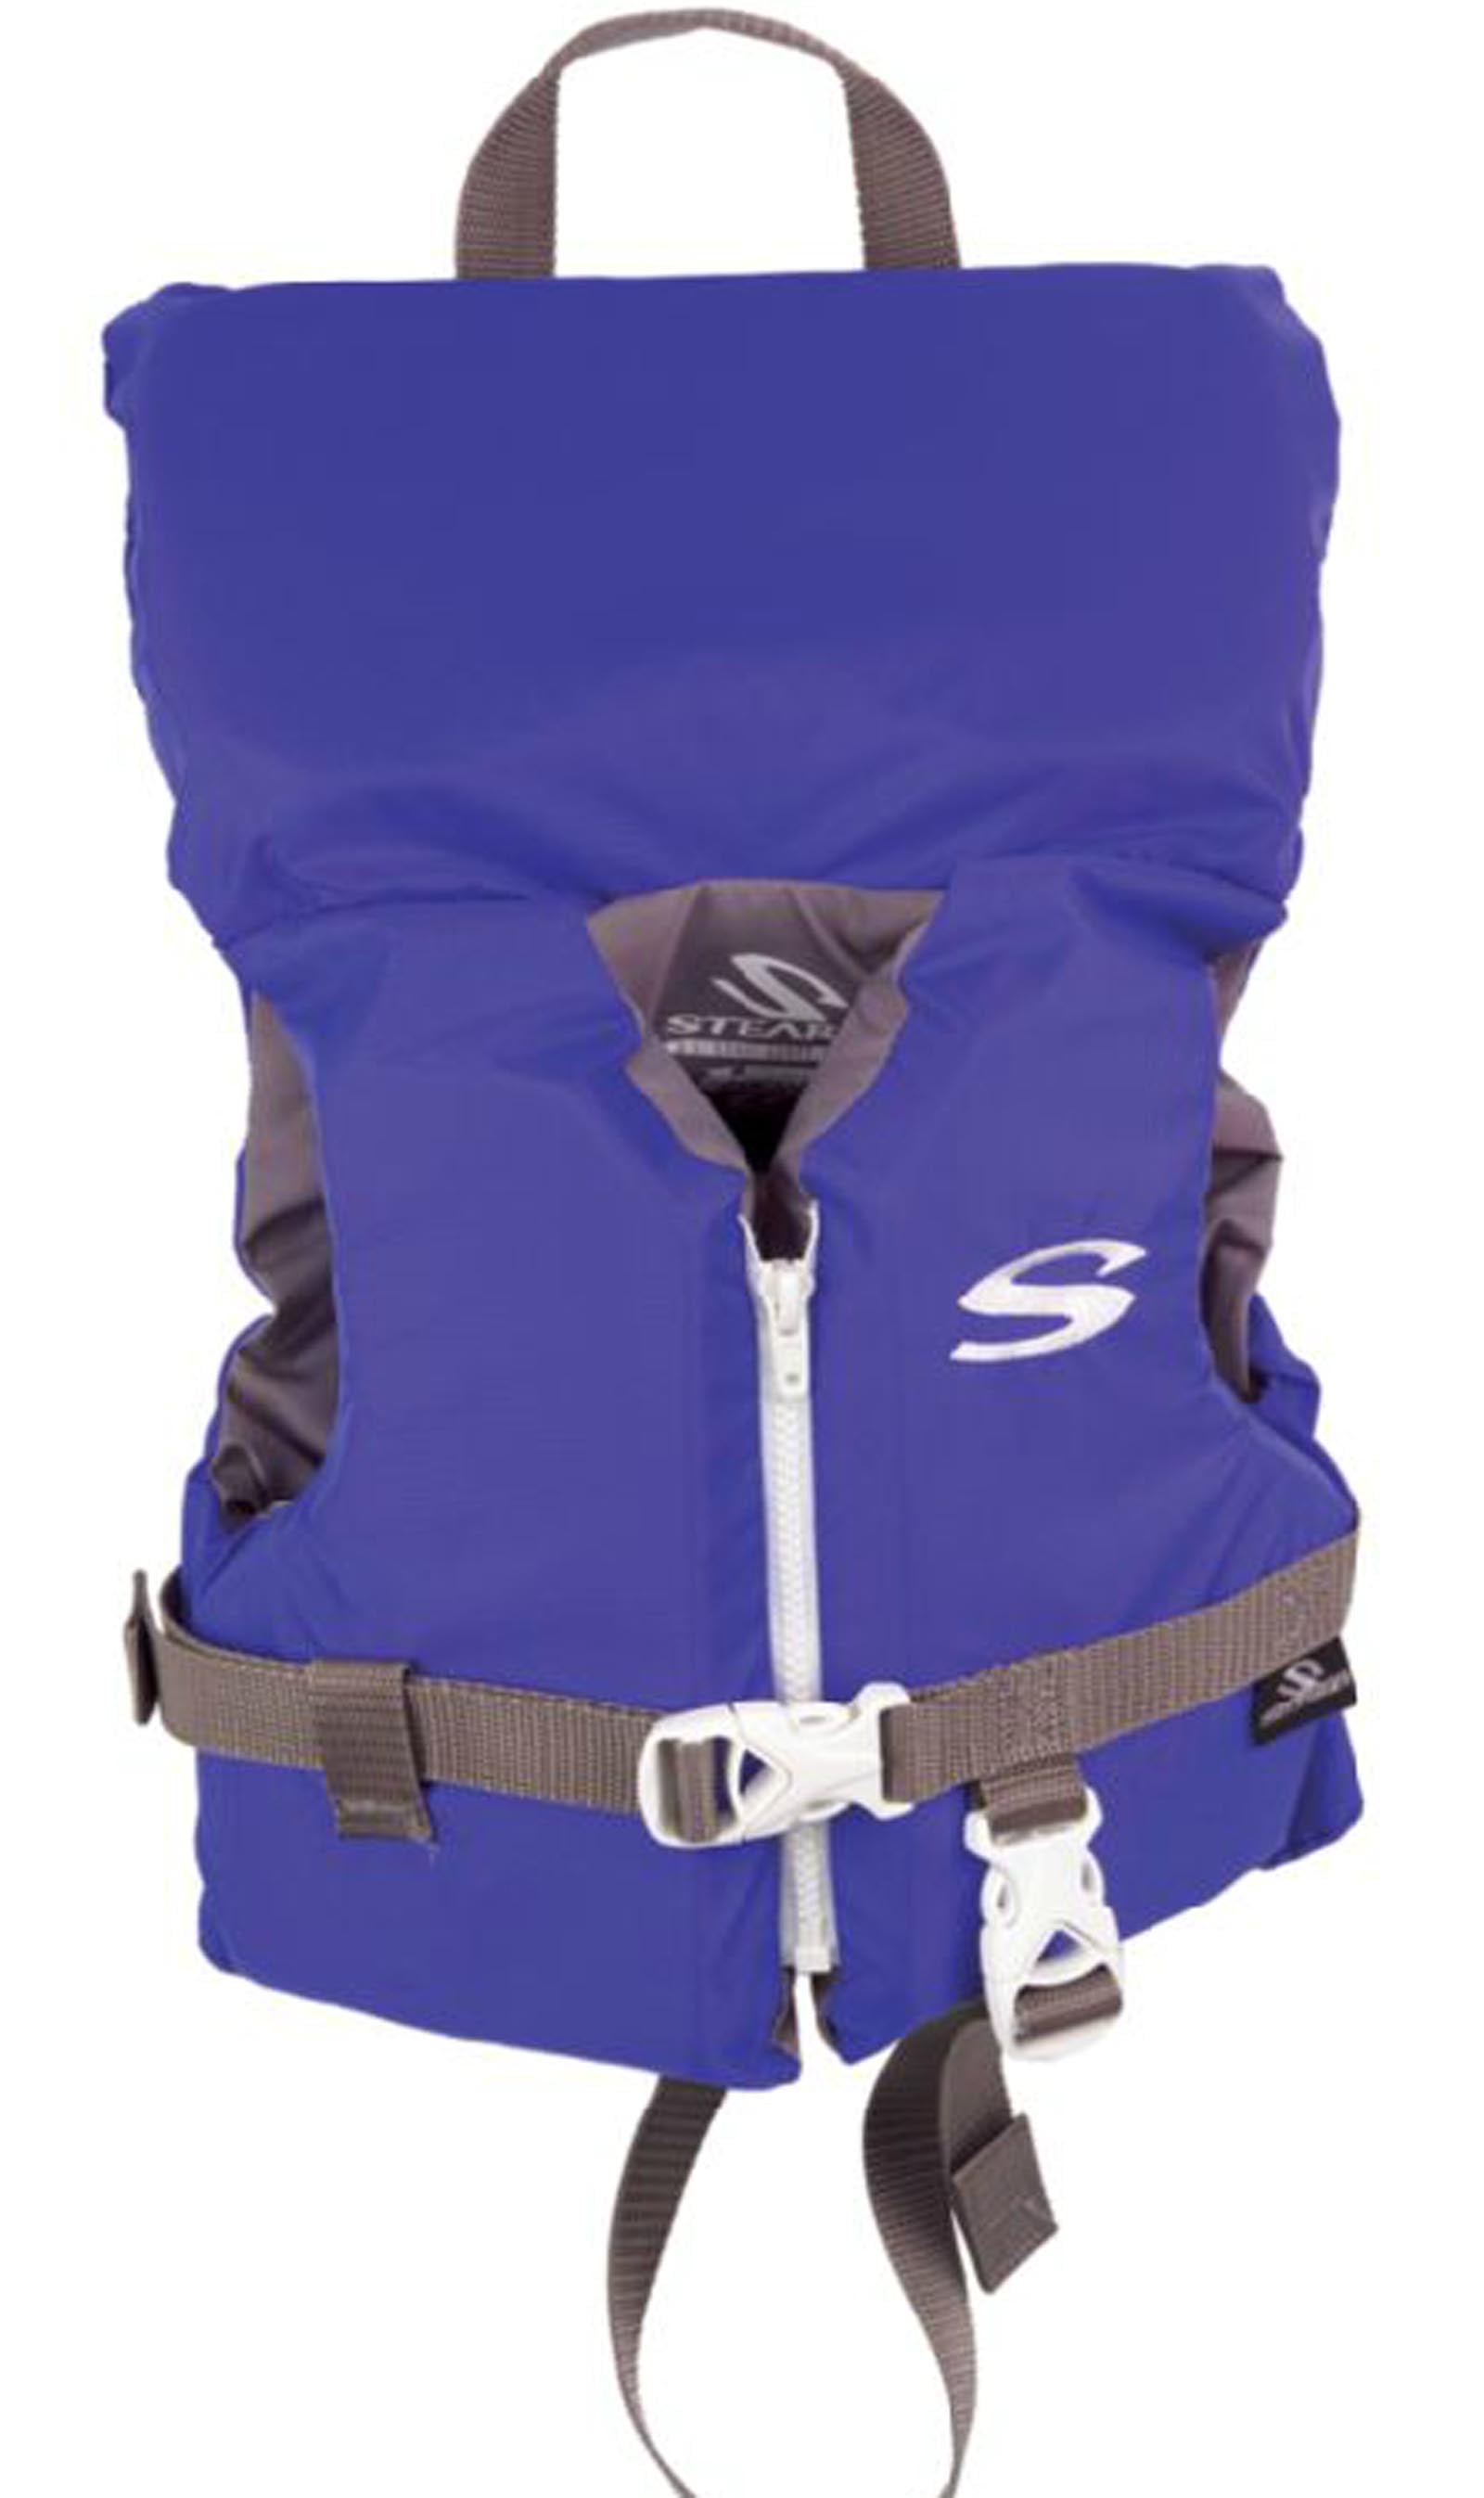 ~ NEW 30-45 lbs Spiderman Spider-Sense Child Life Jacket Ski Vest from Stearns 